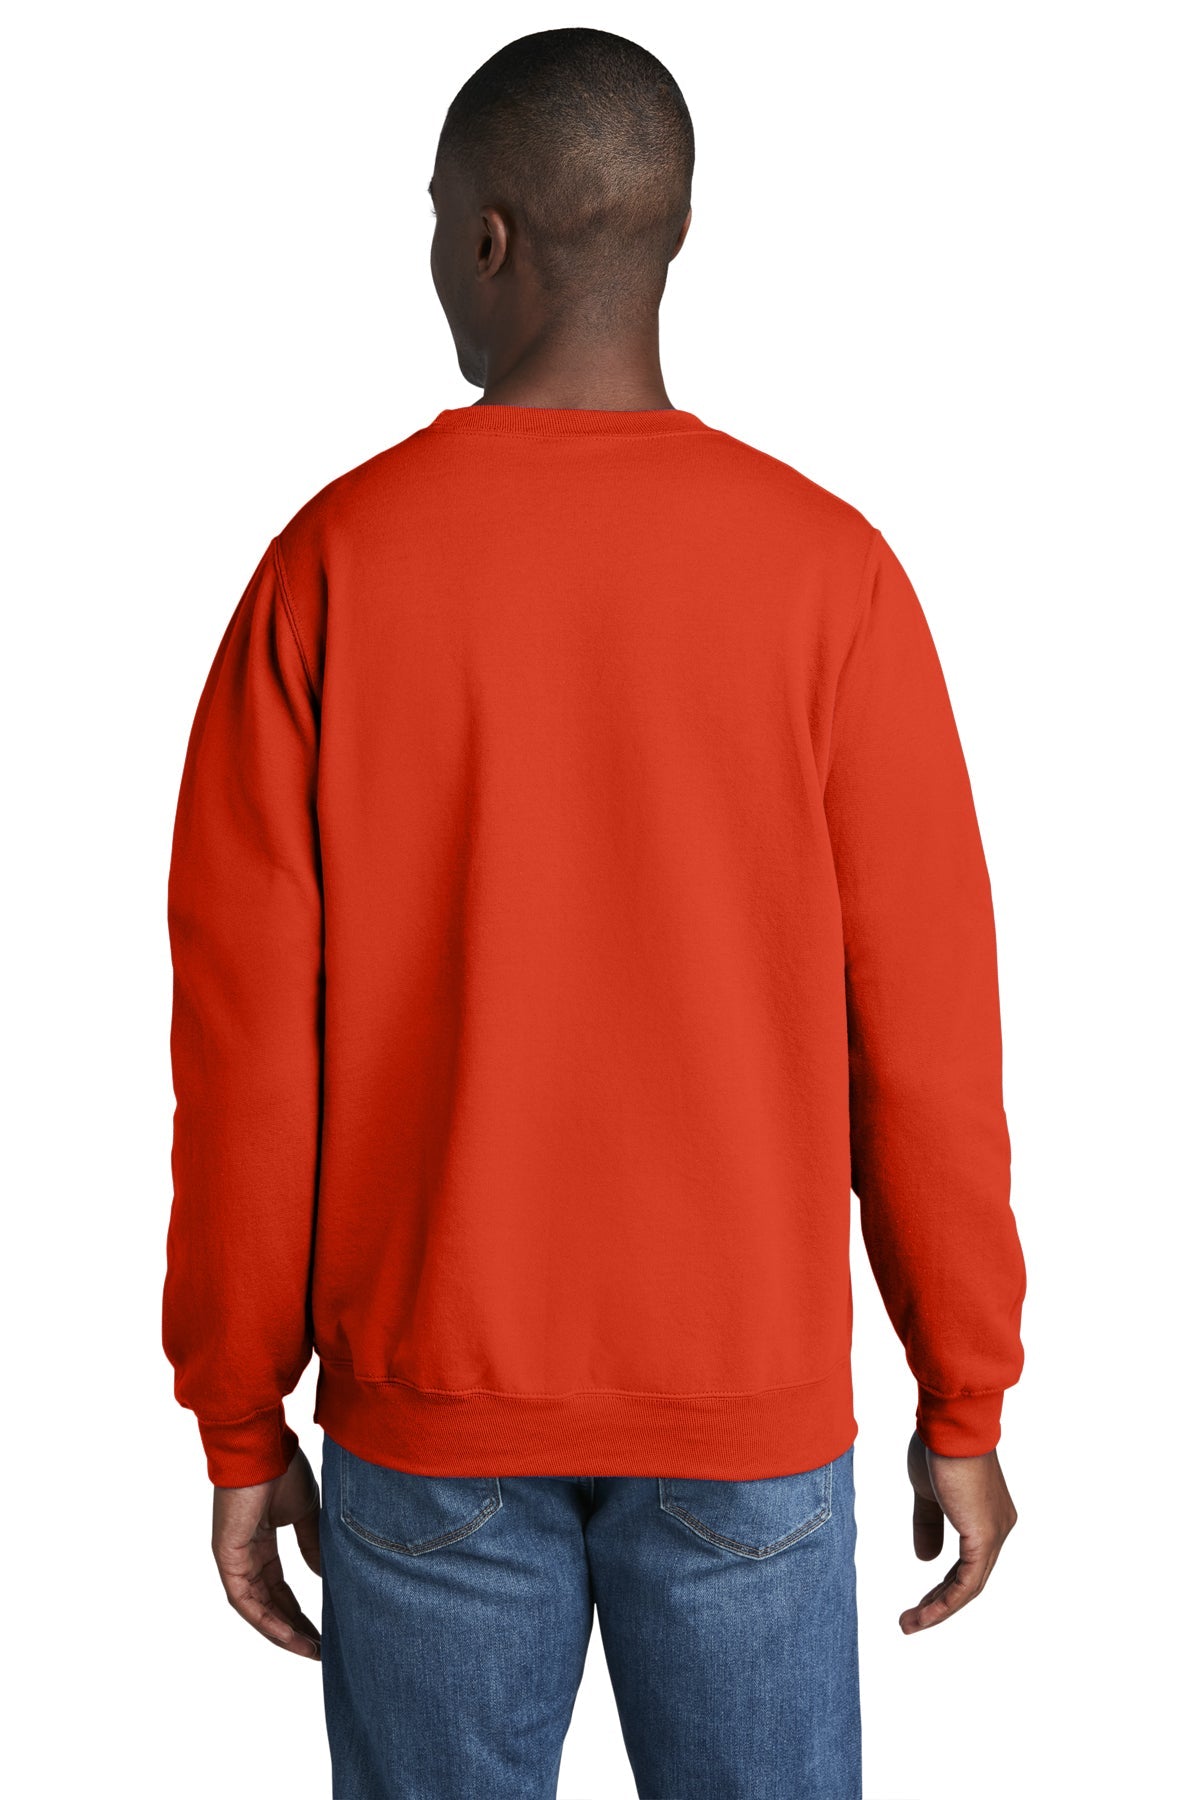 port & company_pc78 _orange_company_logo_sweatshirts